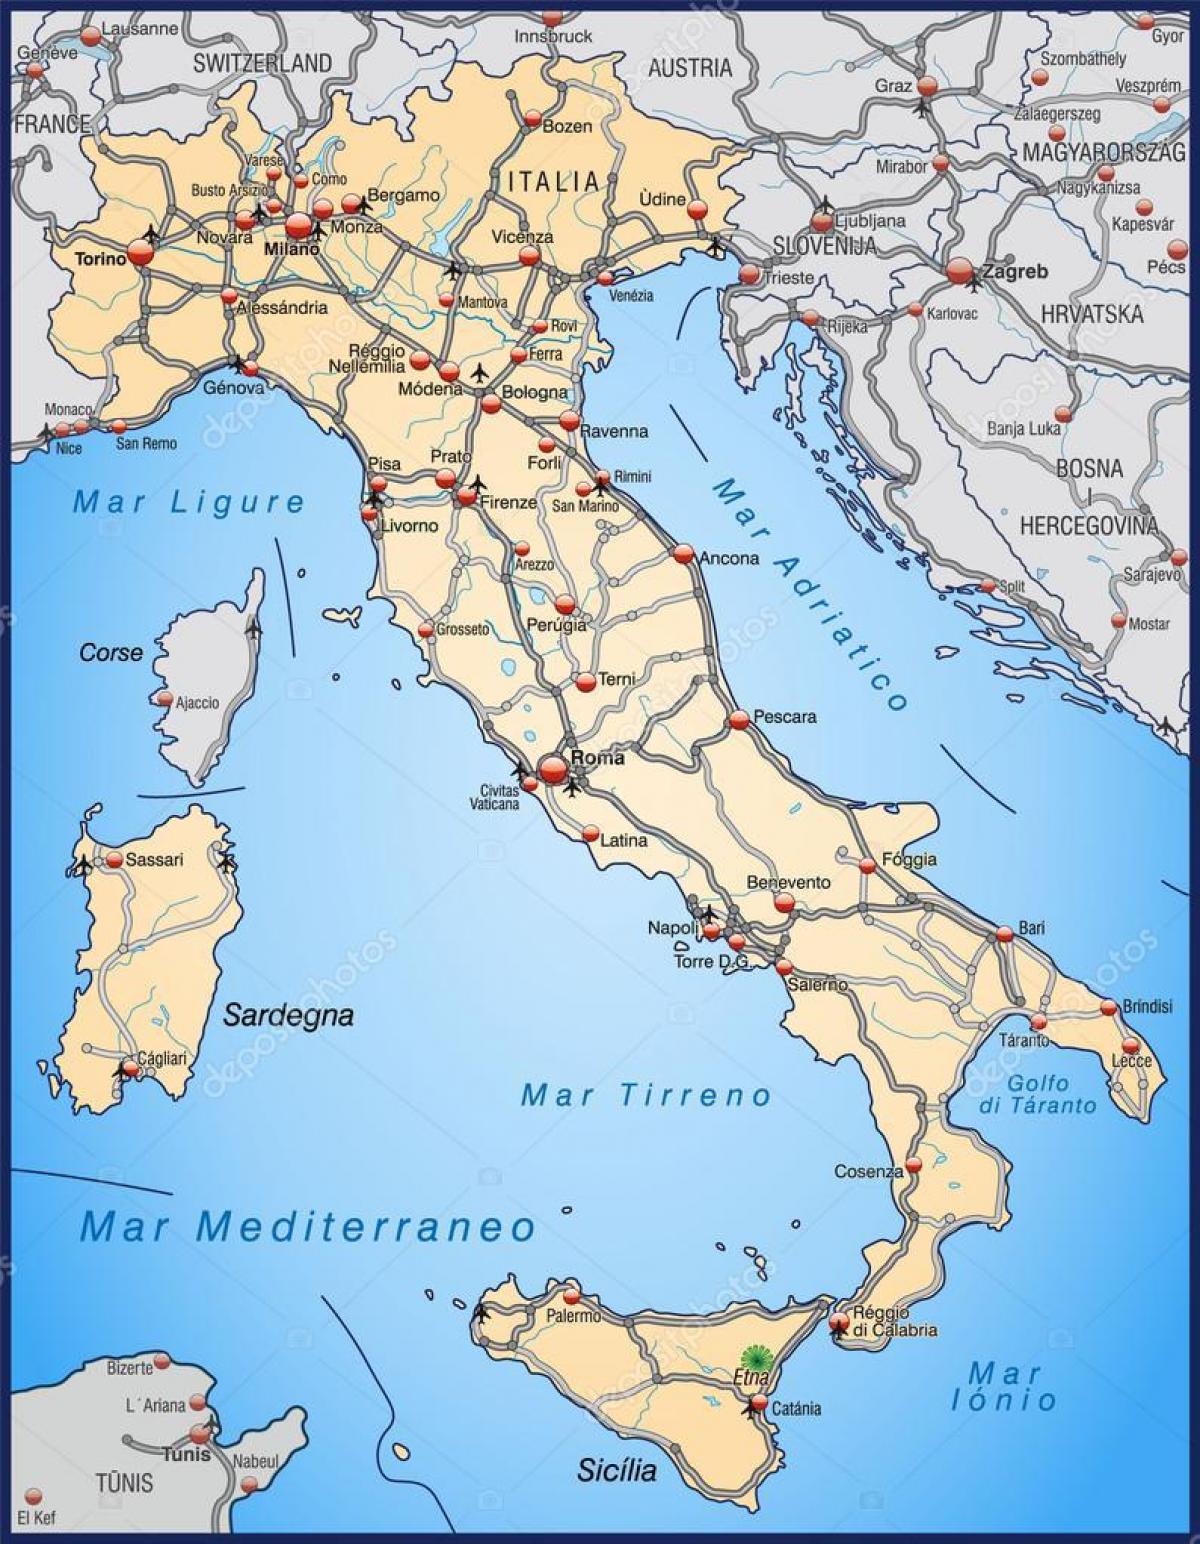 L'italie de l'autoroute de la carte